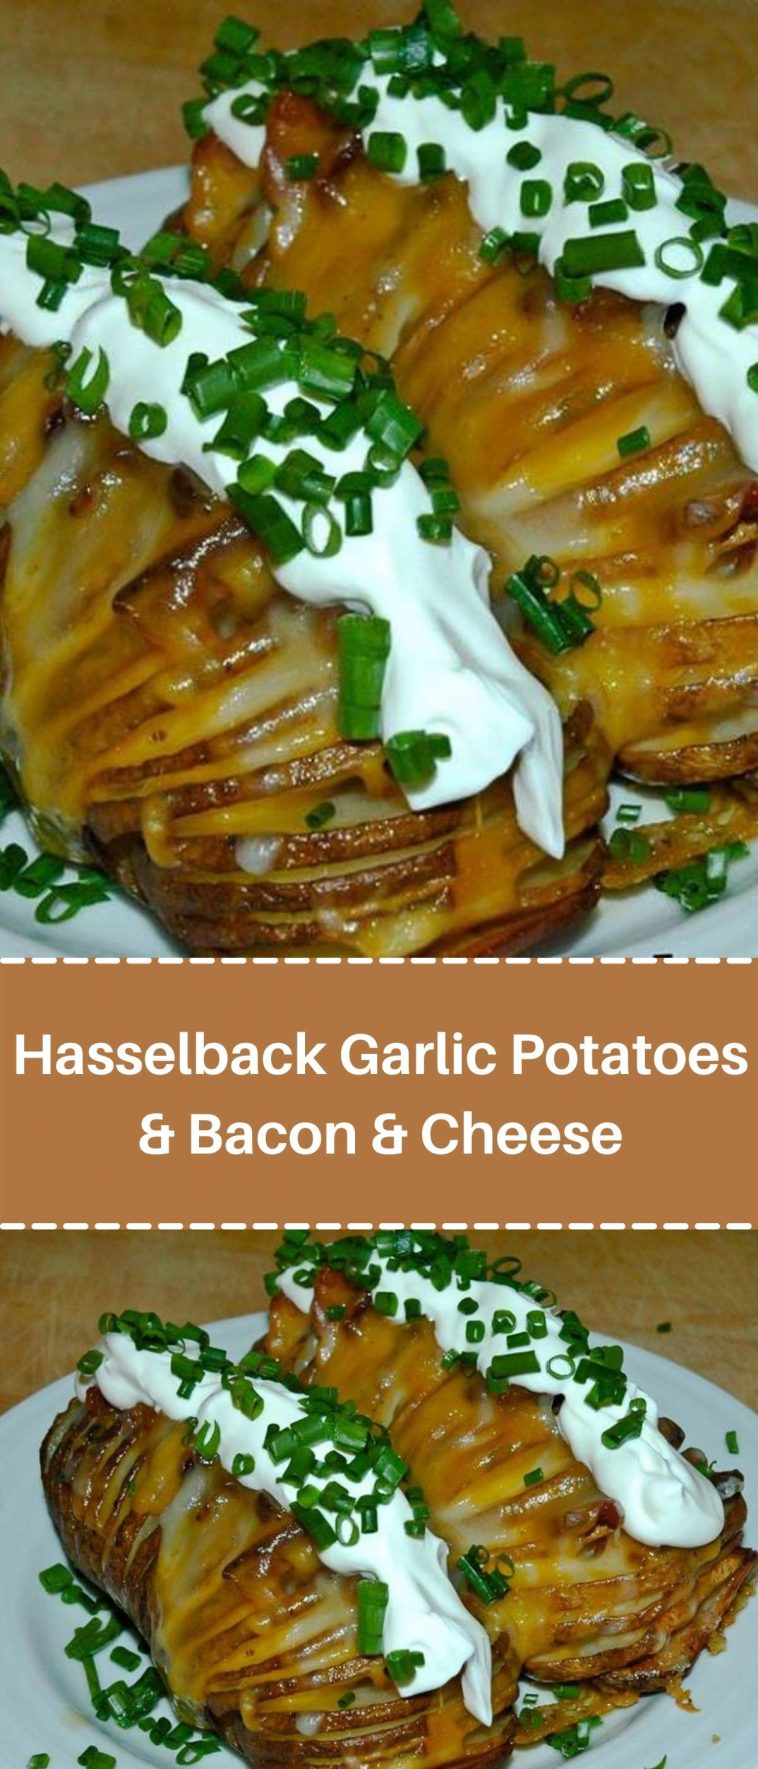 Hasselback Garlic Potatoes w/ Bacon & Cheese Recipe!